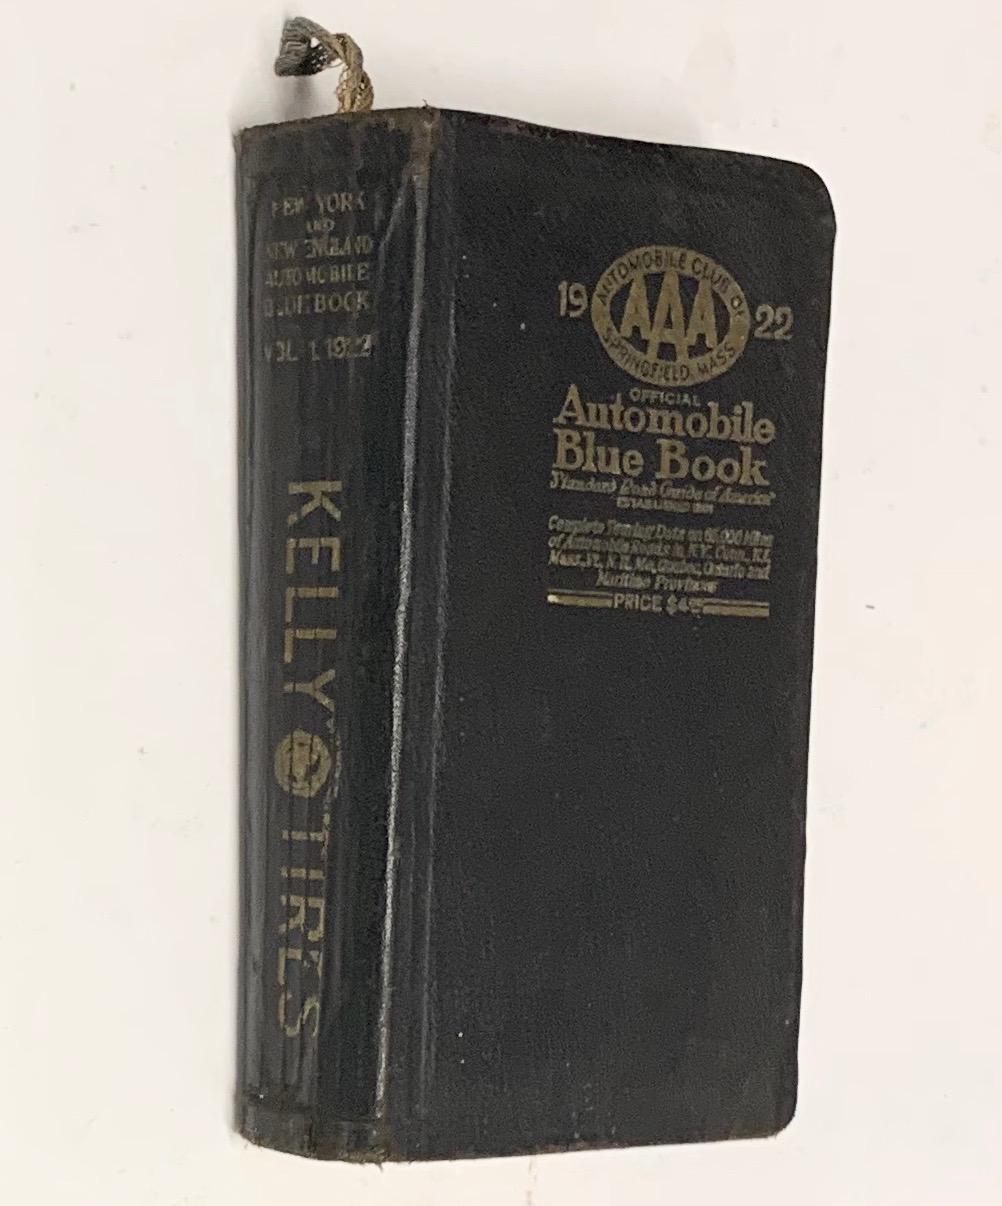 AAA Automotive Blue Book (1922)